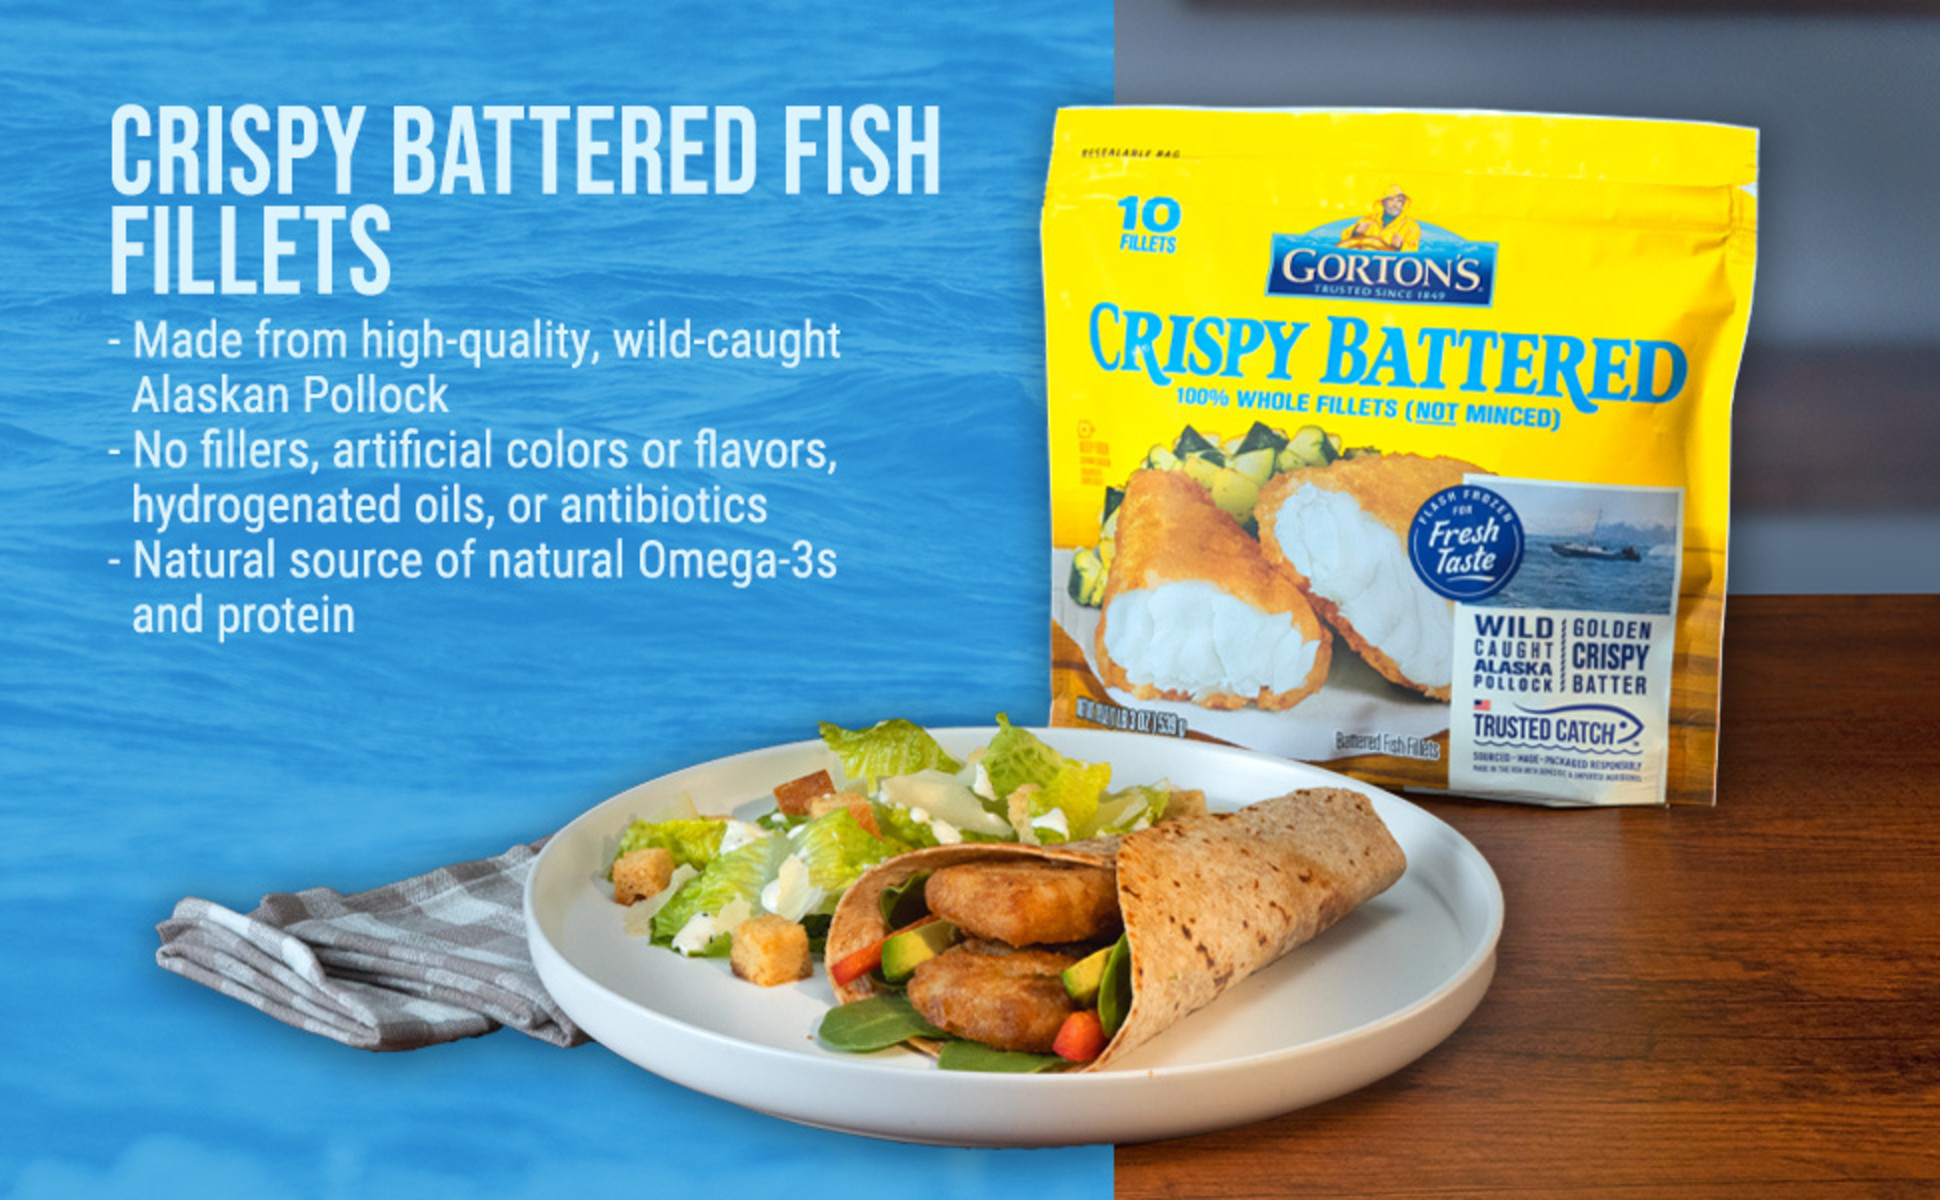 Gorton's Crispy Battered Fish, Wild Caught Pollock, Frozen, 10 Count, 19  oz. Resealable Bag 